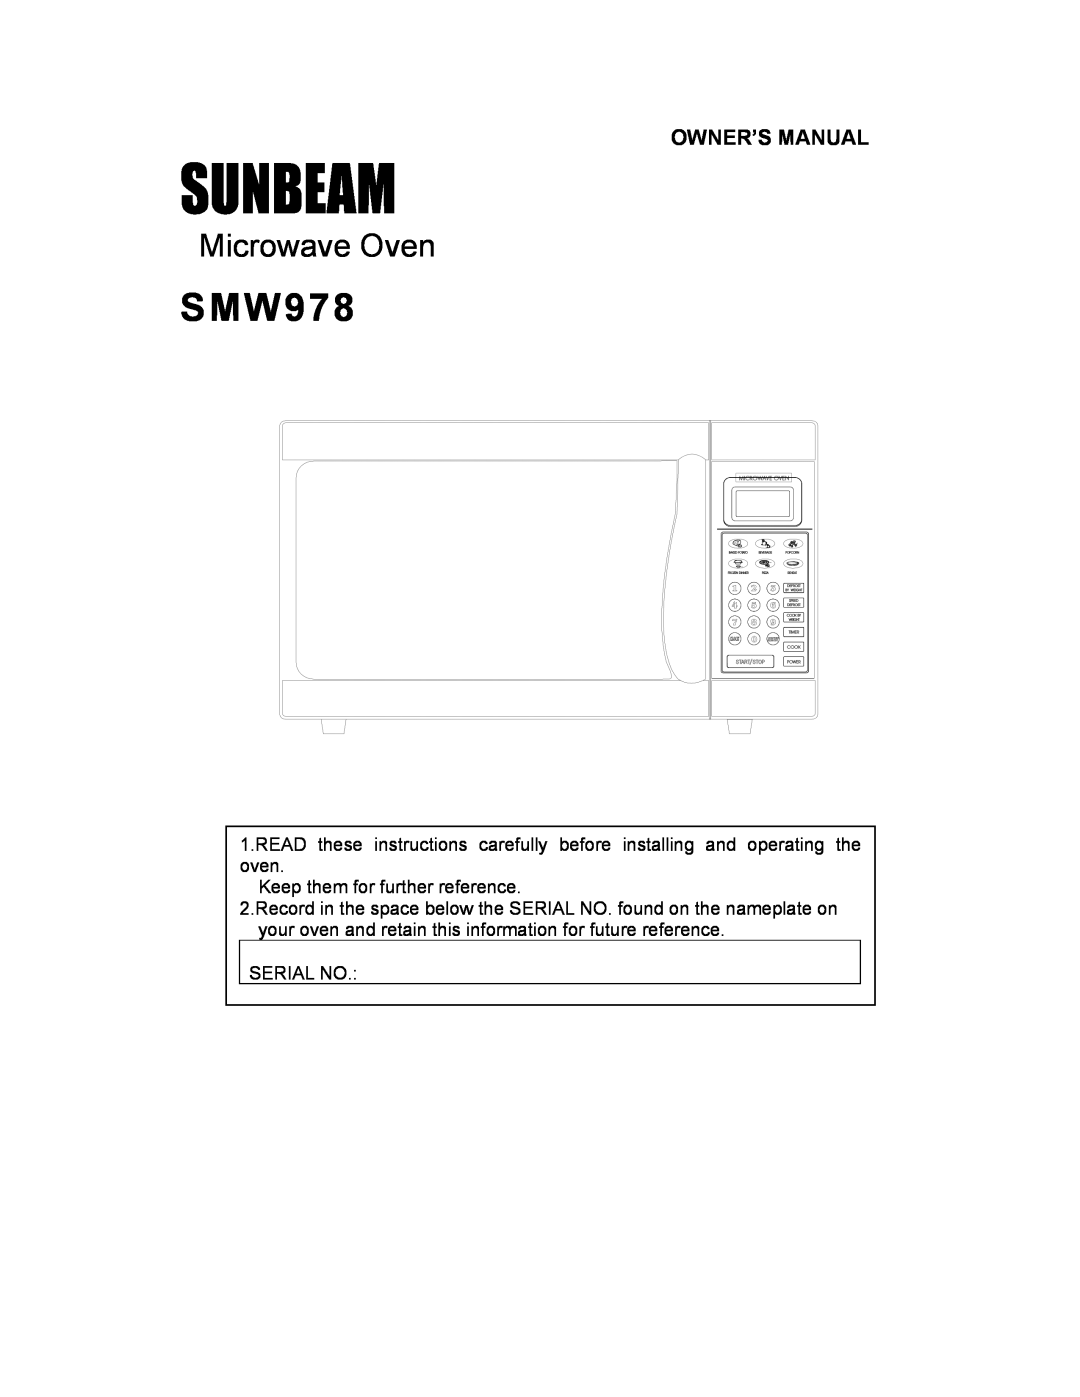 Sunbeam SMW978 owner manual Sunbeam, Microwave Oven 